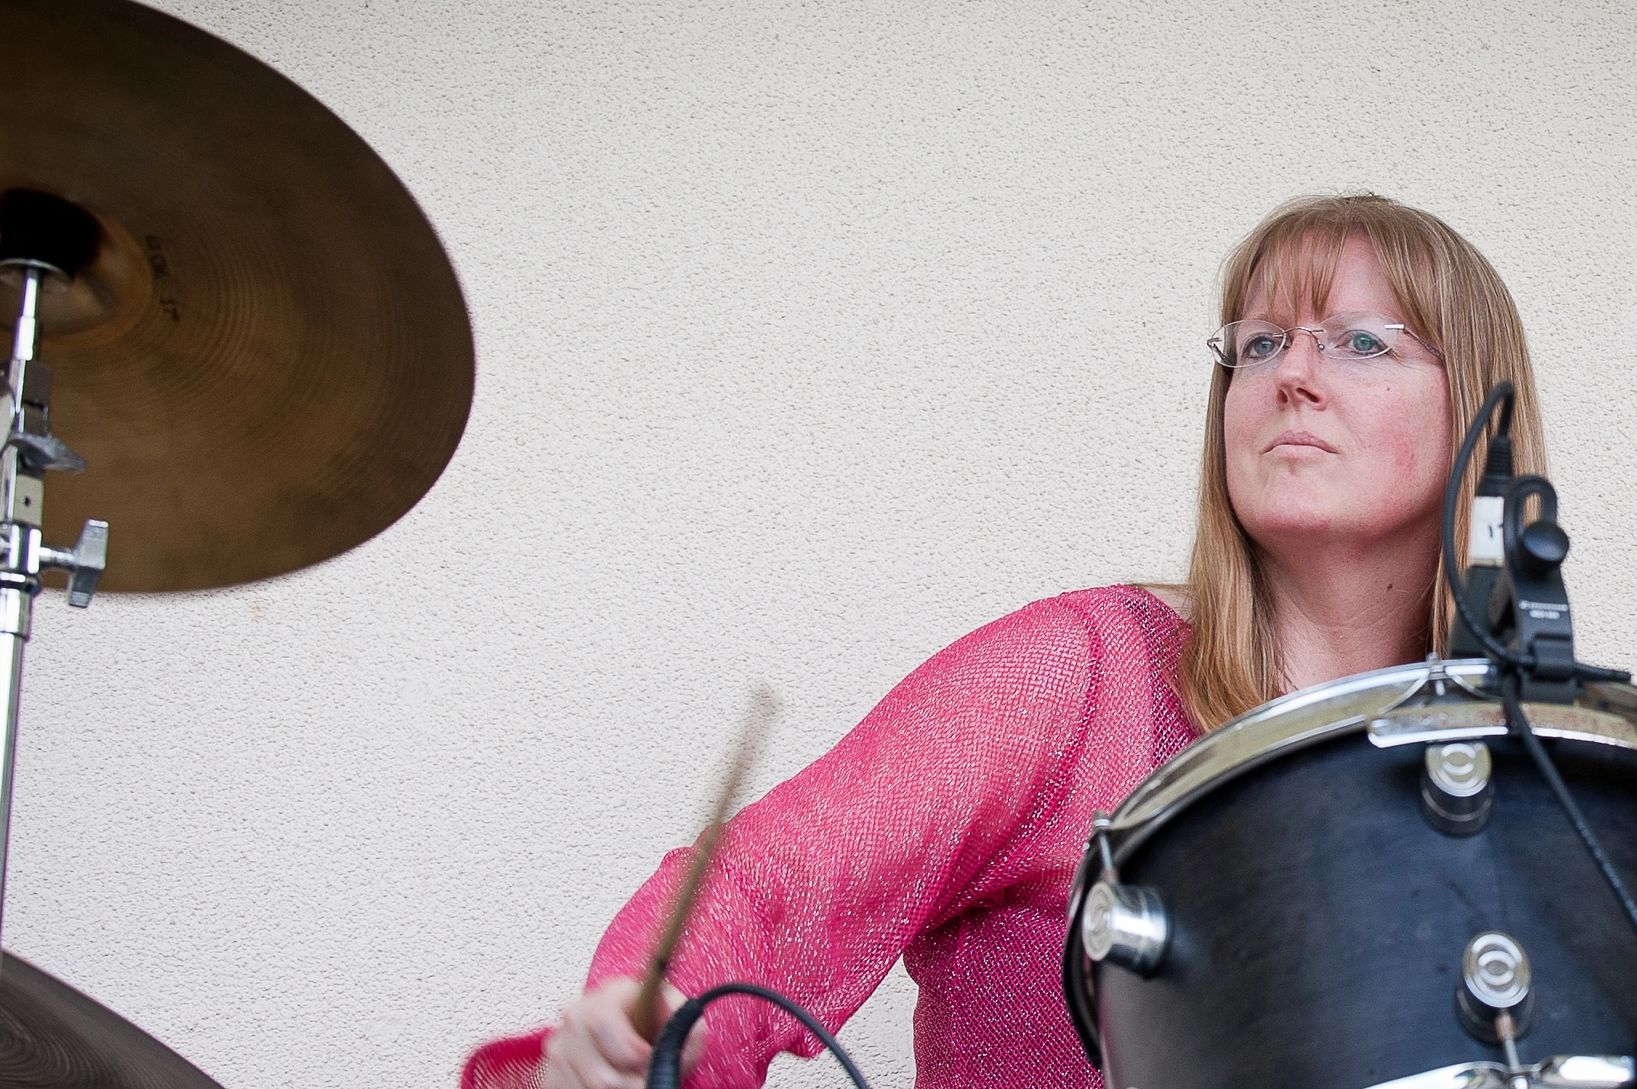 Kelli Rae Tubbs
Drums
Blues on the Chippewa Festival
Sabian Cymbals
ProMark Drum Sticks
Aquarian Dru